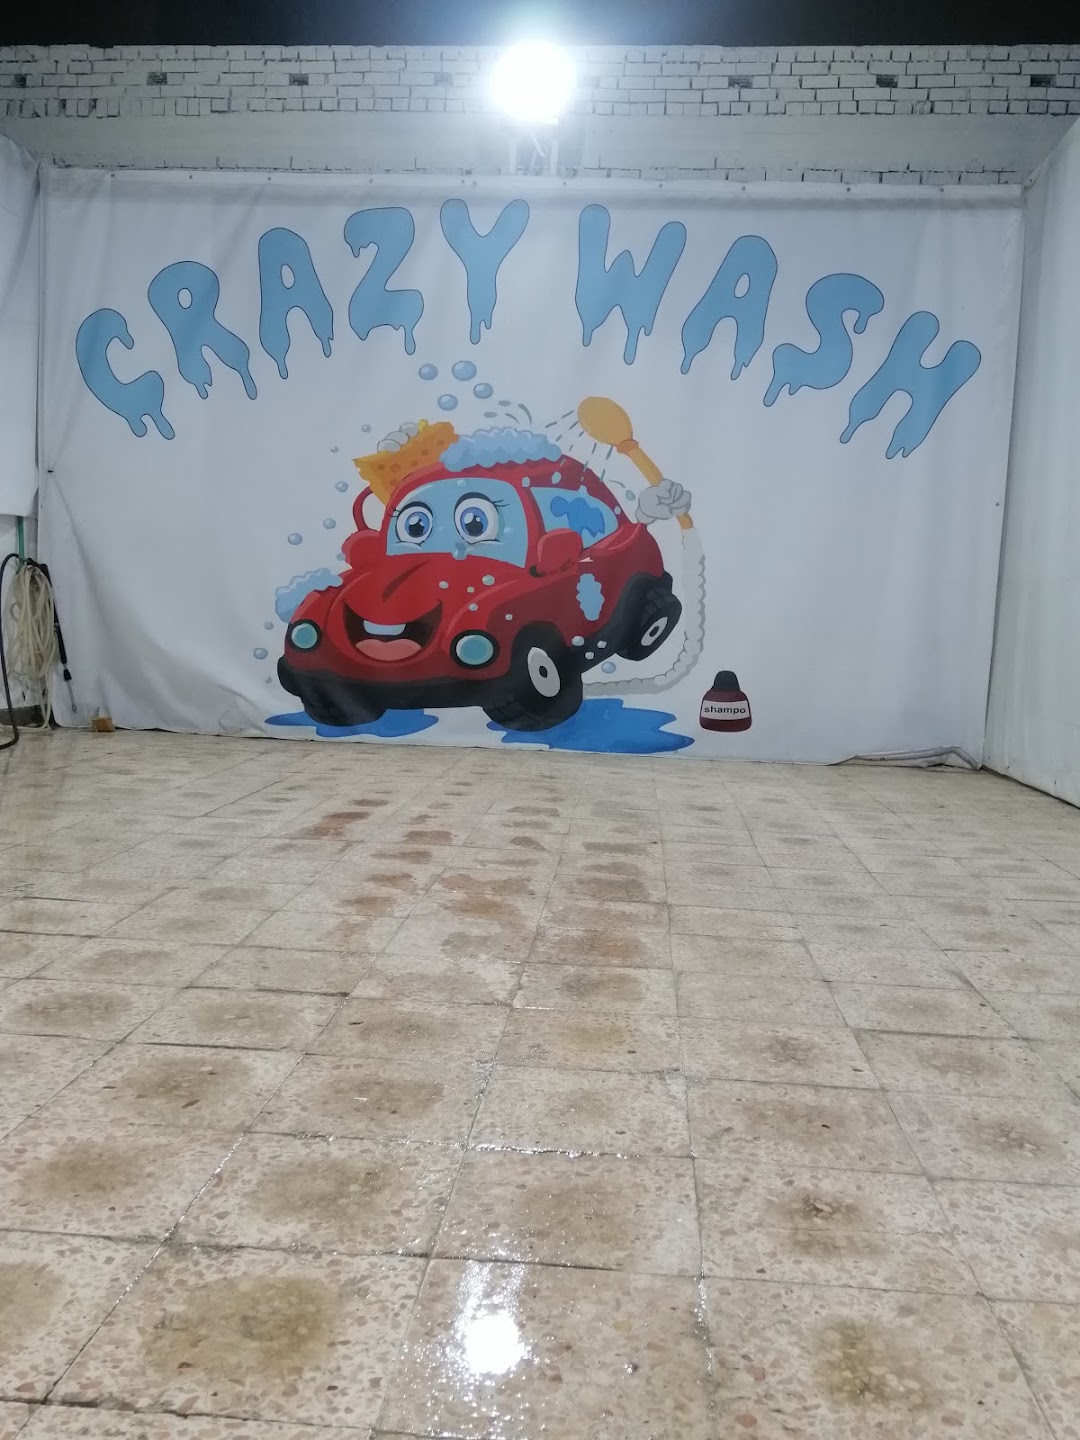 crazy wash